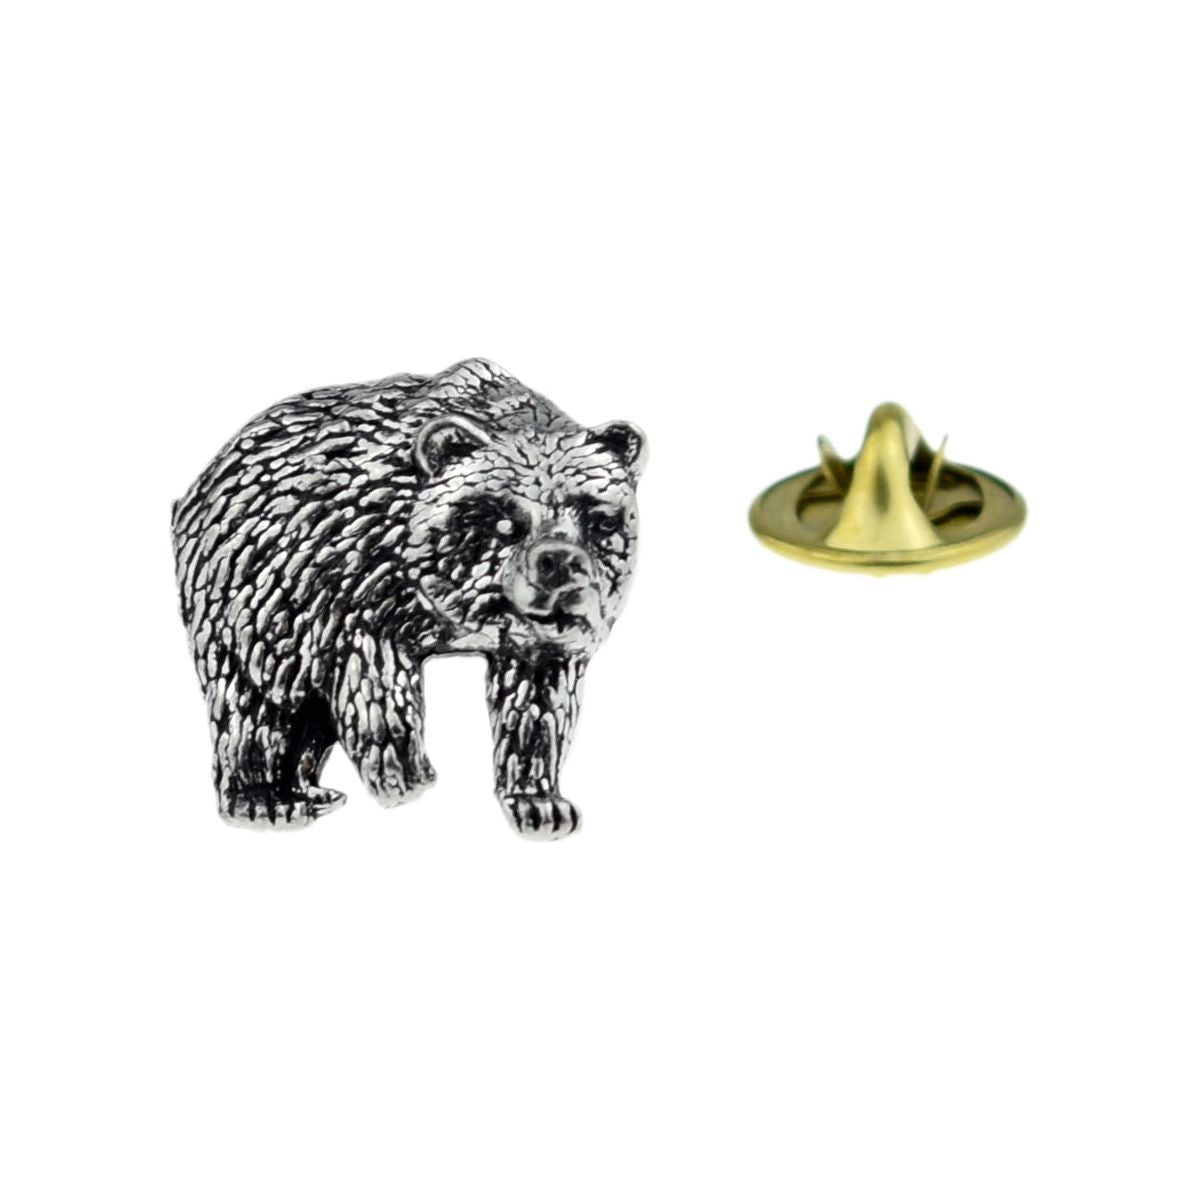 Bear English Pewter Lapel Pin Badge - Ashton and Finch